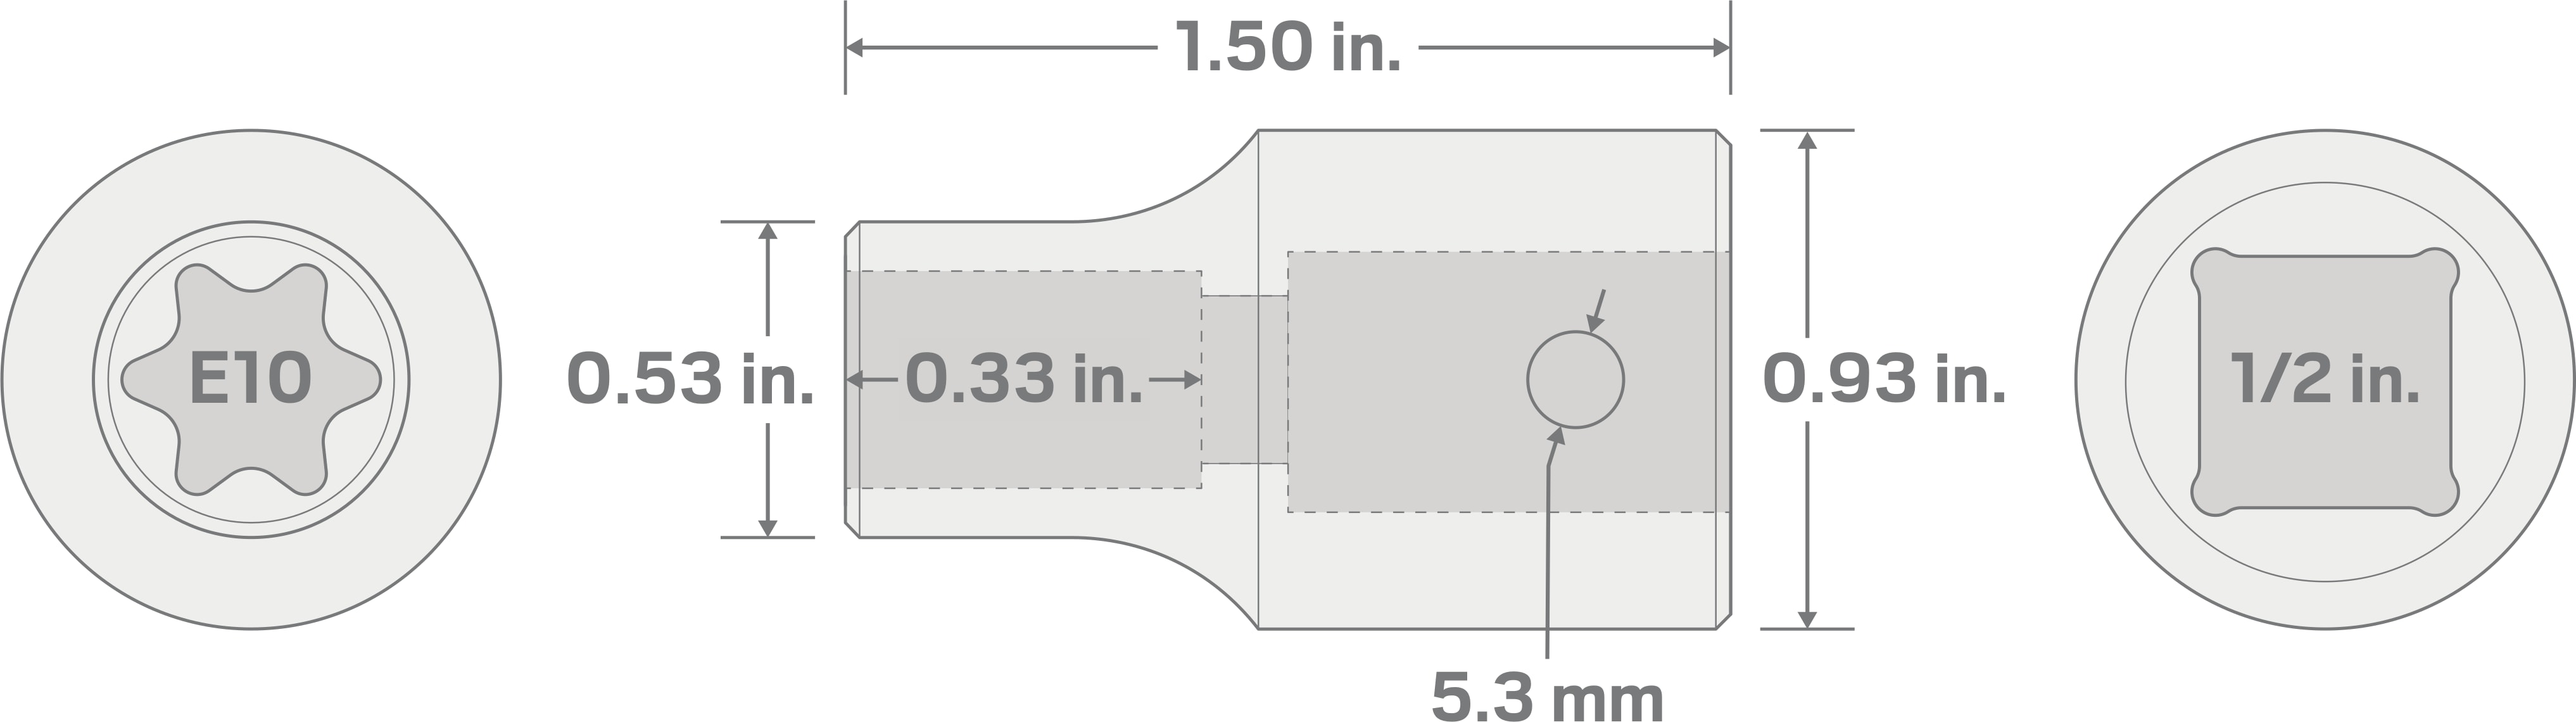 Specs for 1/2 Inch Drive x E10 External Star Impact Socket